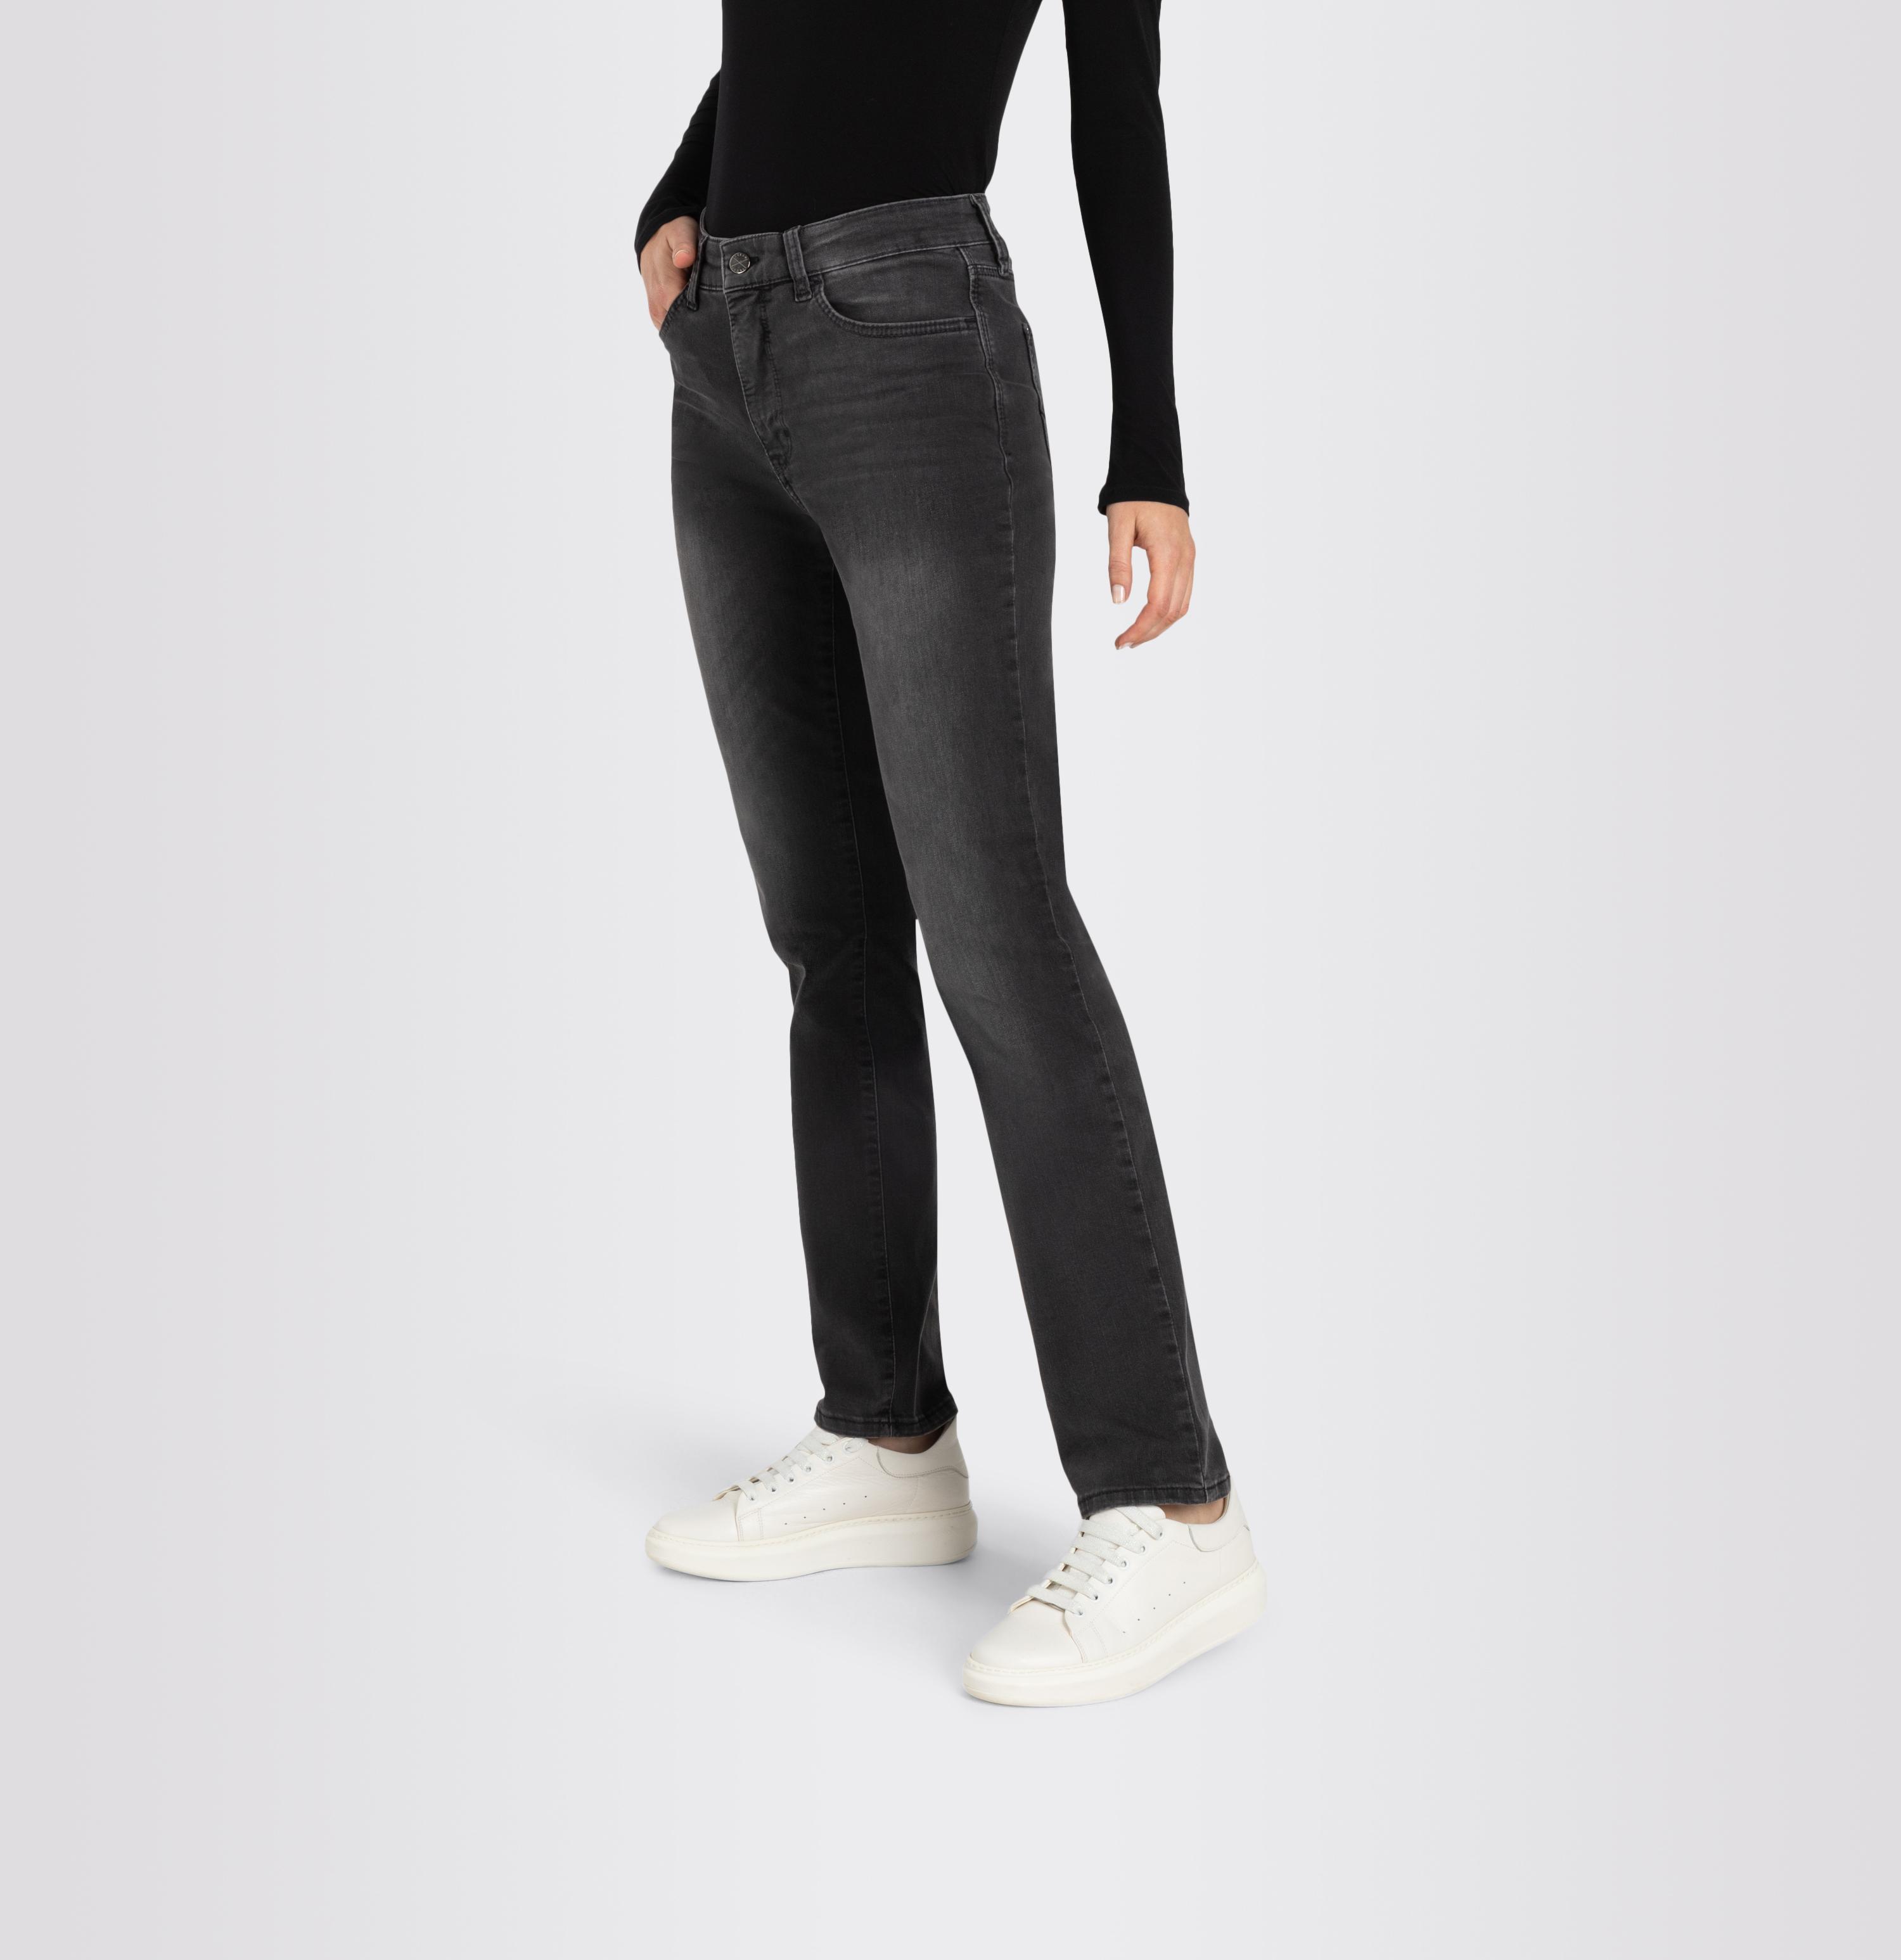 MAC AT - Damenhose, grau D972 Jeans Dream, Authentic, | Shop Dream